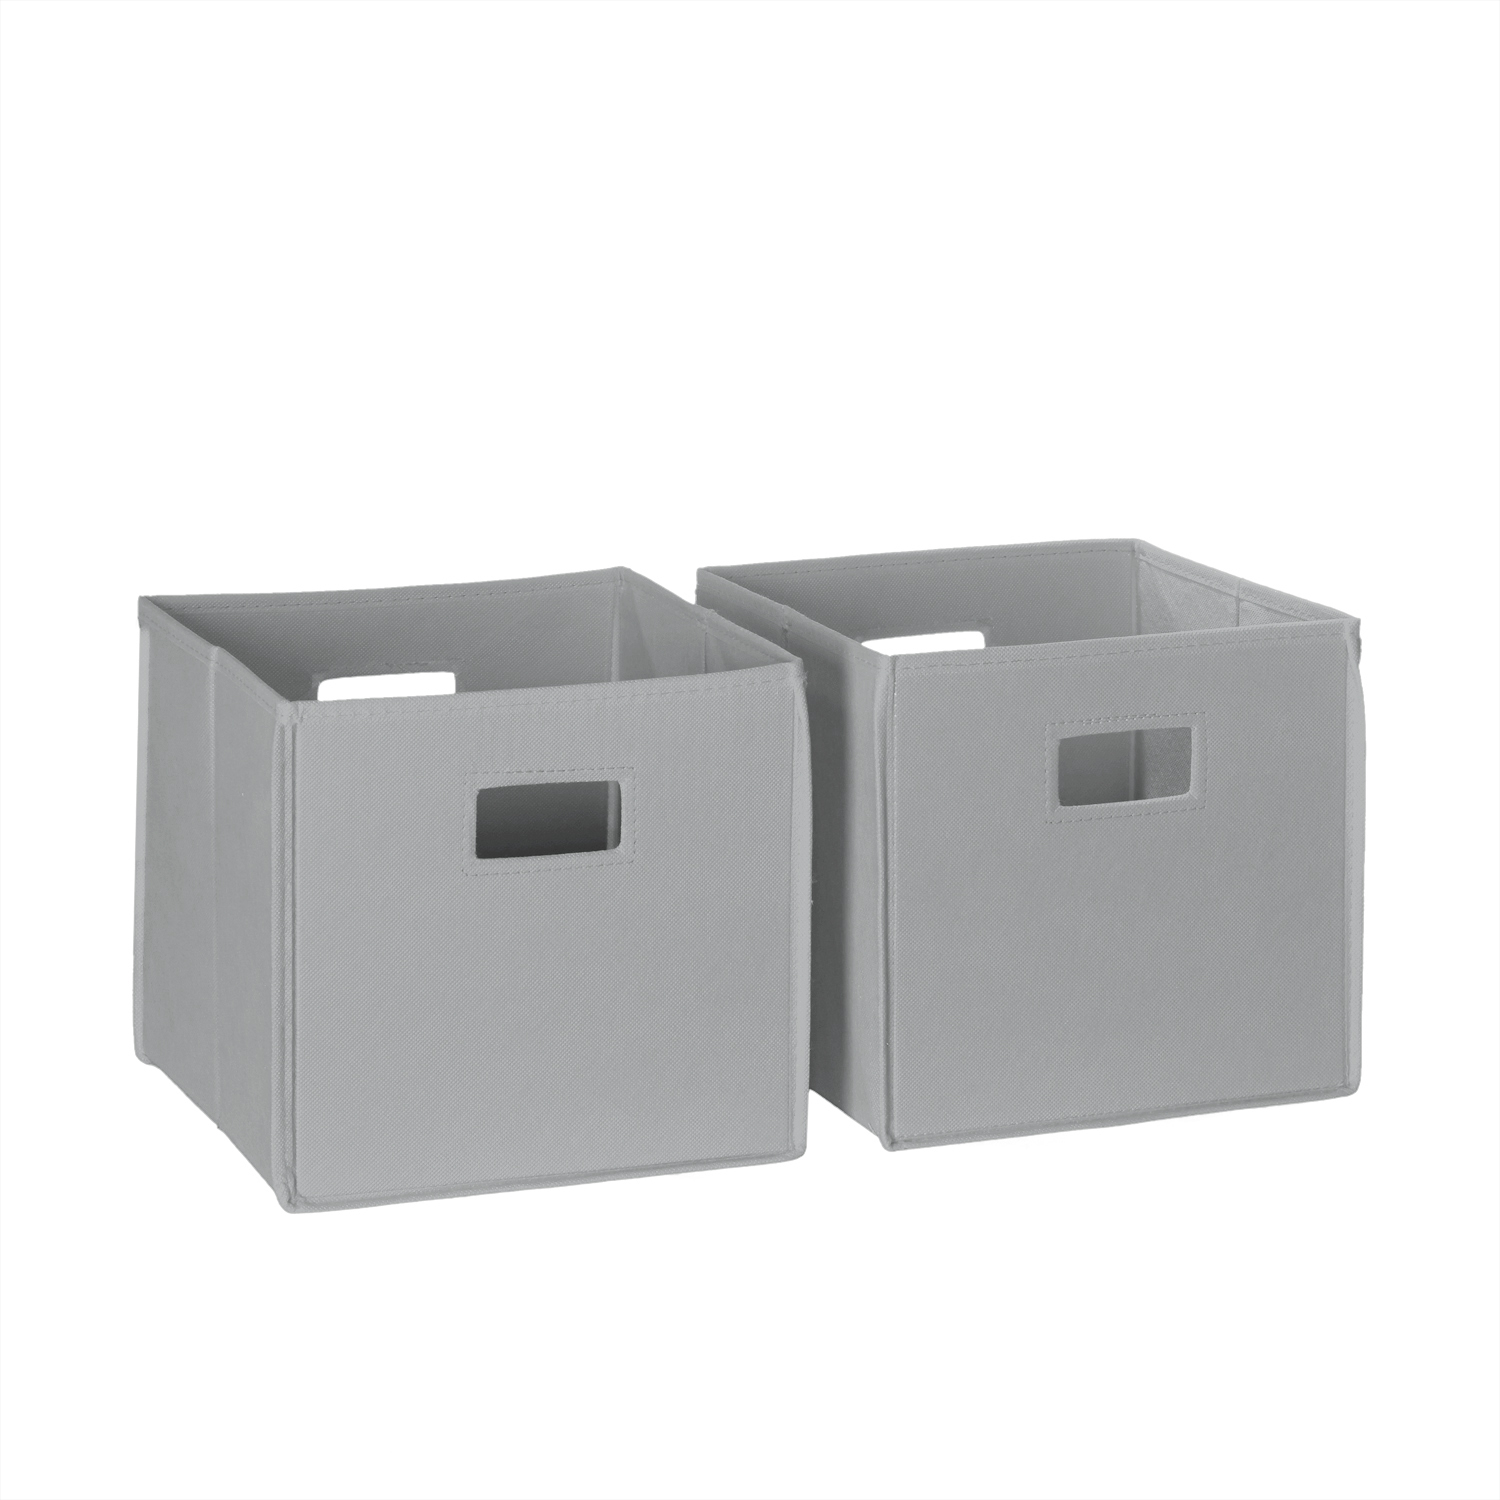 RiverRidge Home Folding Fabric Cube Storage Bin Set of 2 - Gray - image 1 of 13